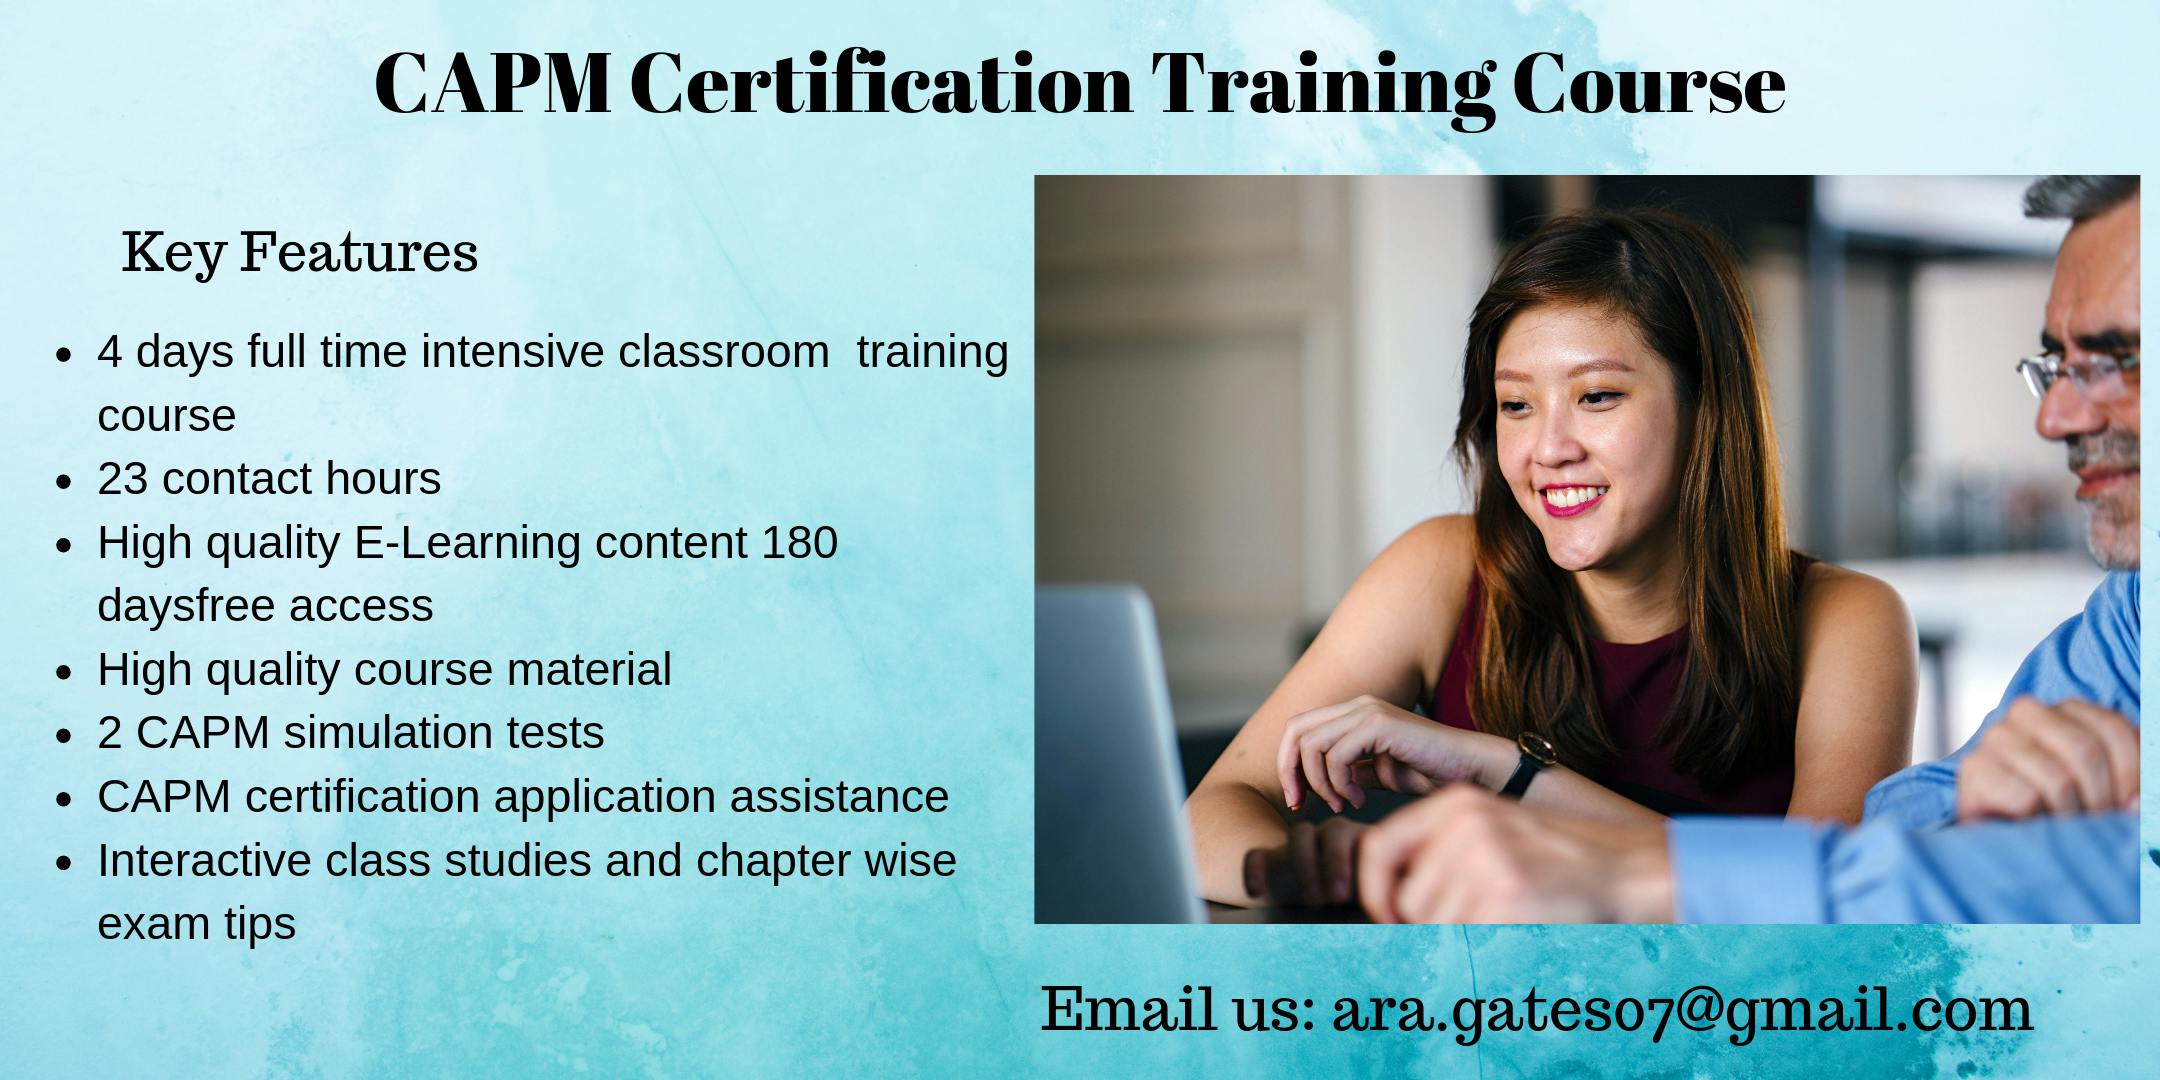 CAPM Certification Course in Eureka, CA